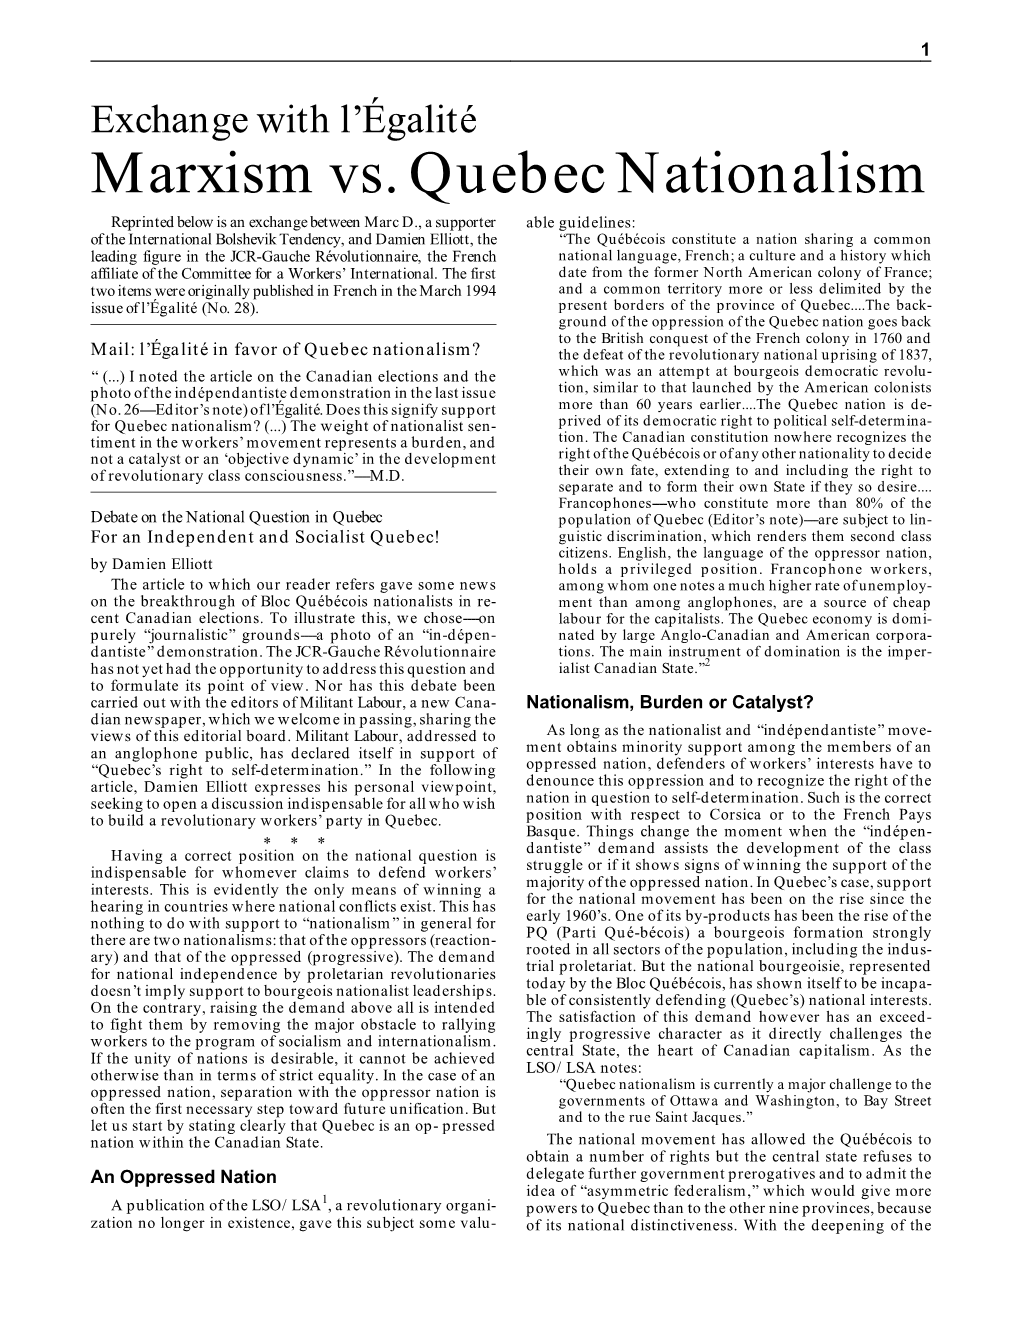 Marxism Vs. Quebec Nationalism